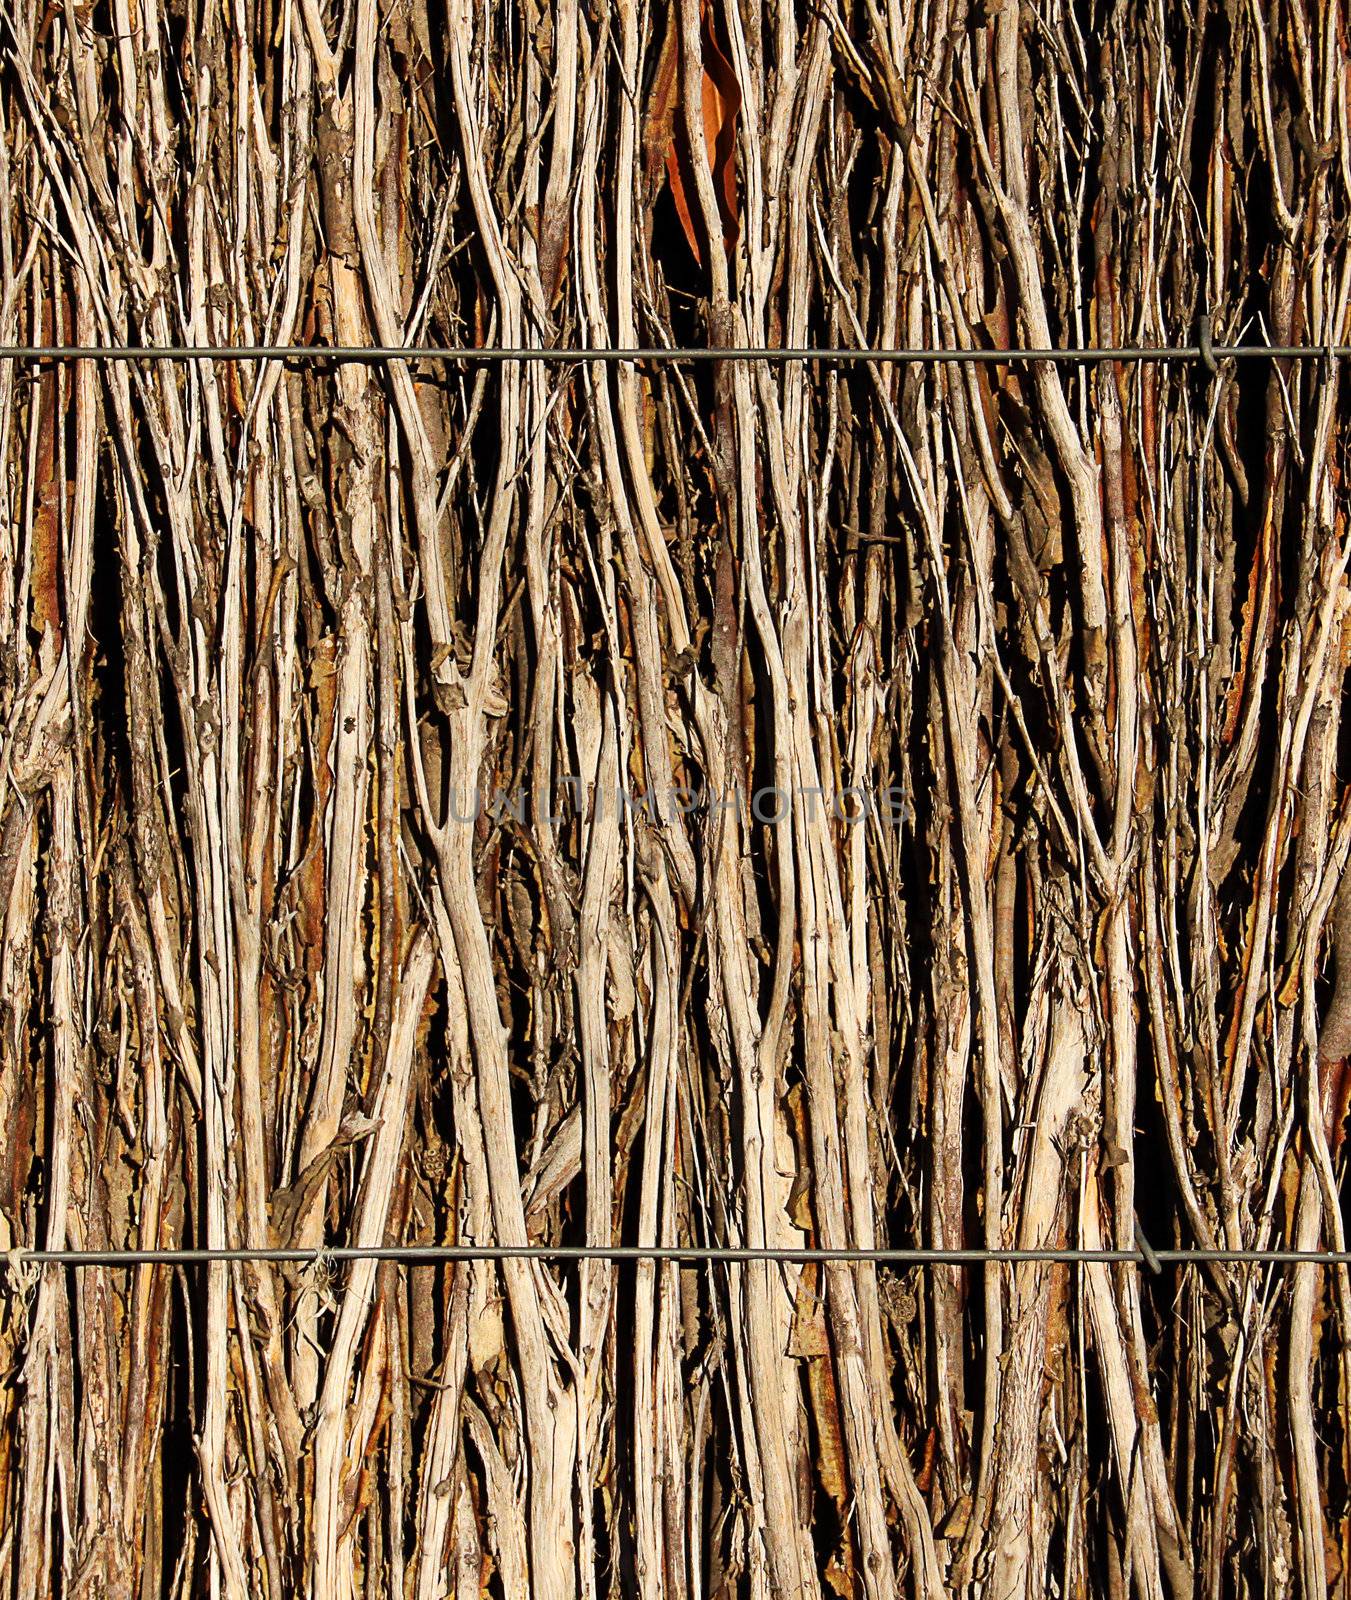 Sticks within a Brush Fence Background